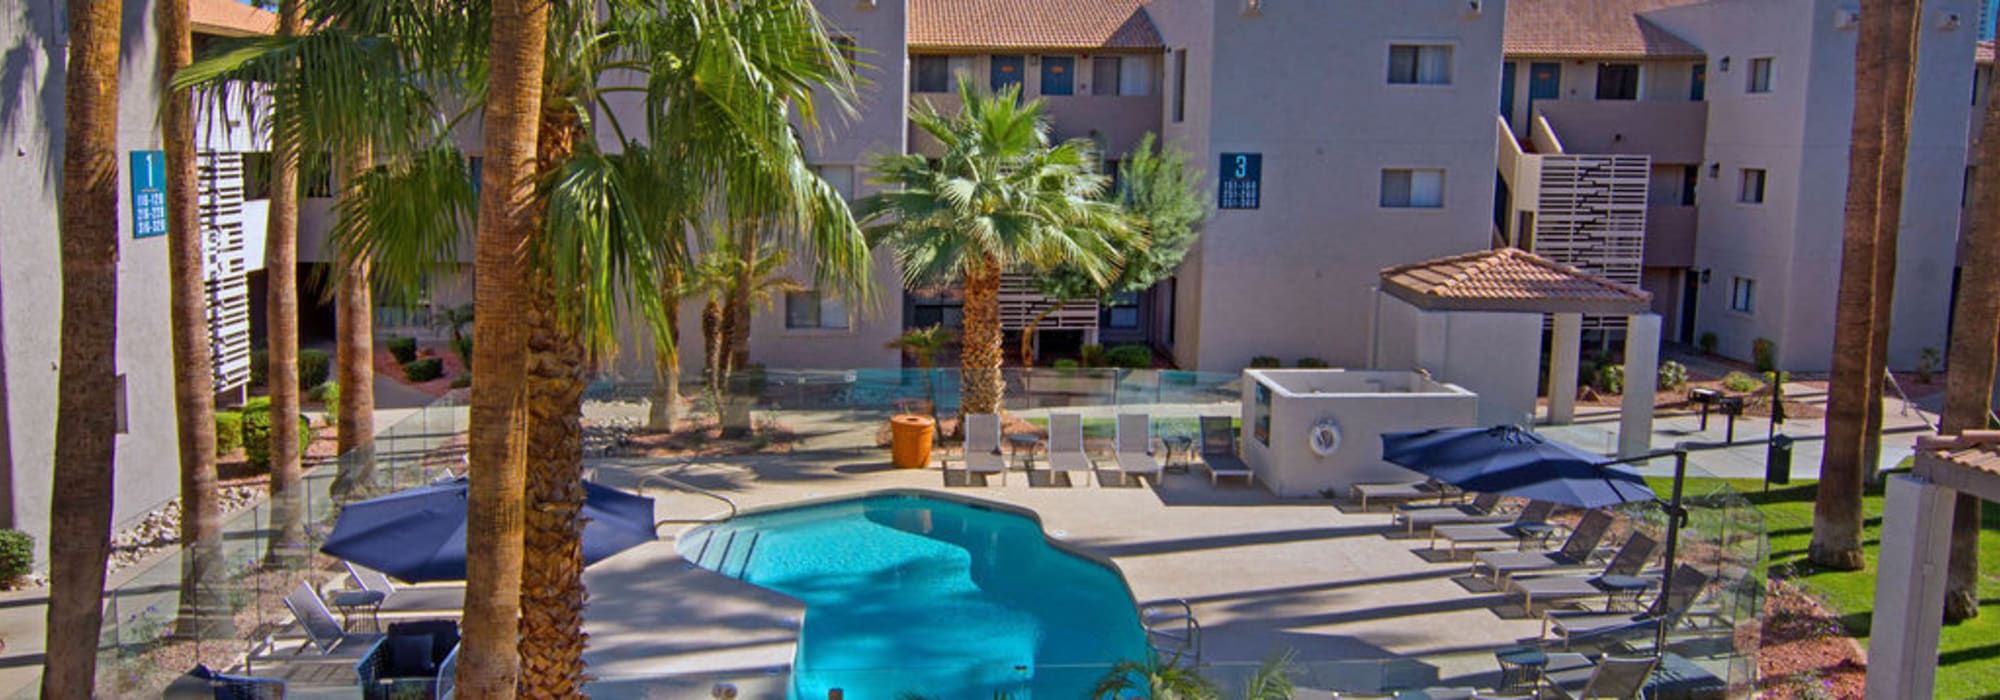 Our beautiful swimming pool at Riverside Apartments in Tempe, Arizona